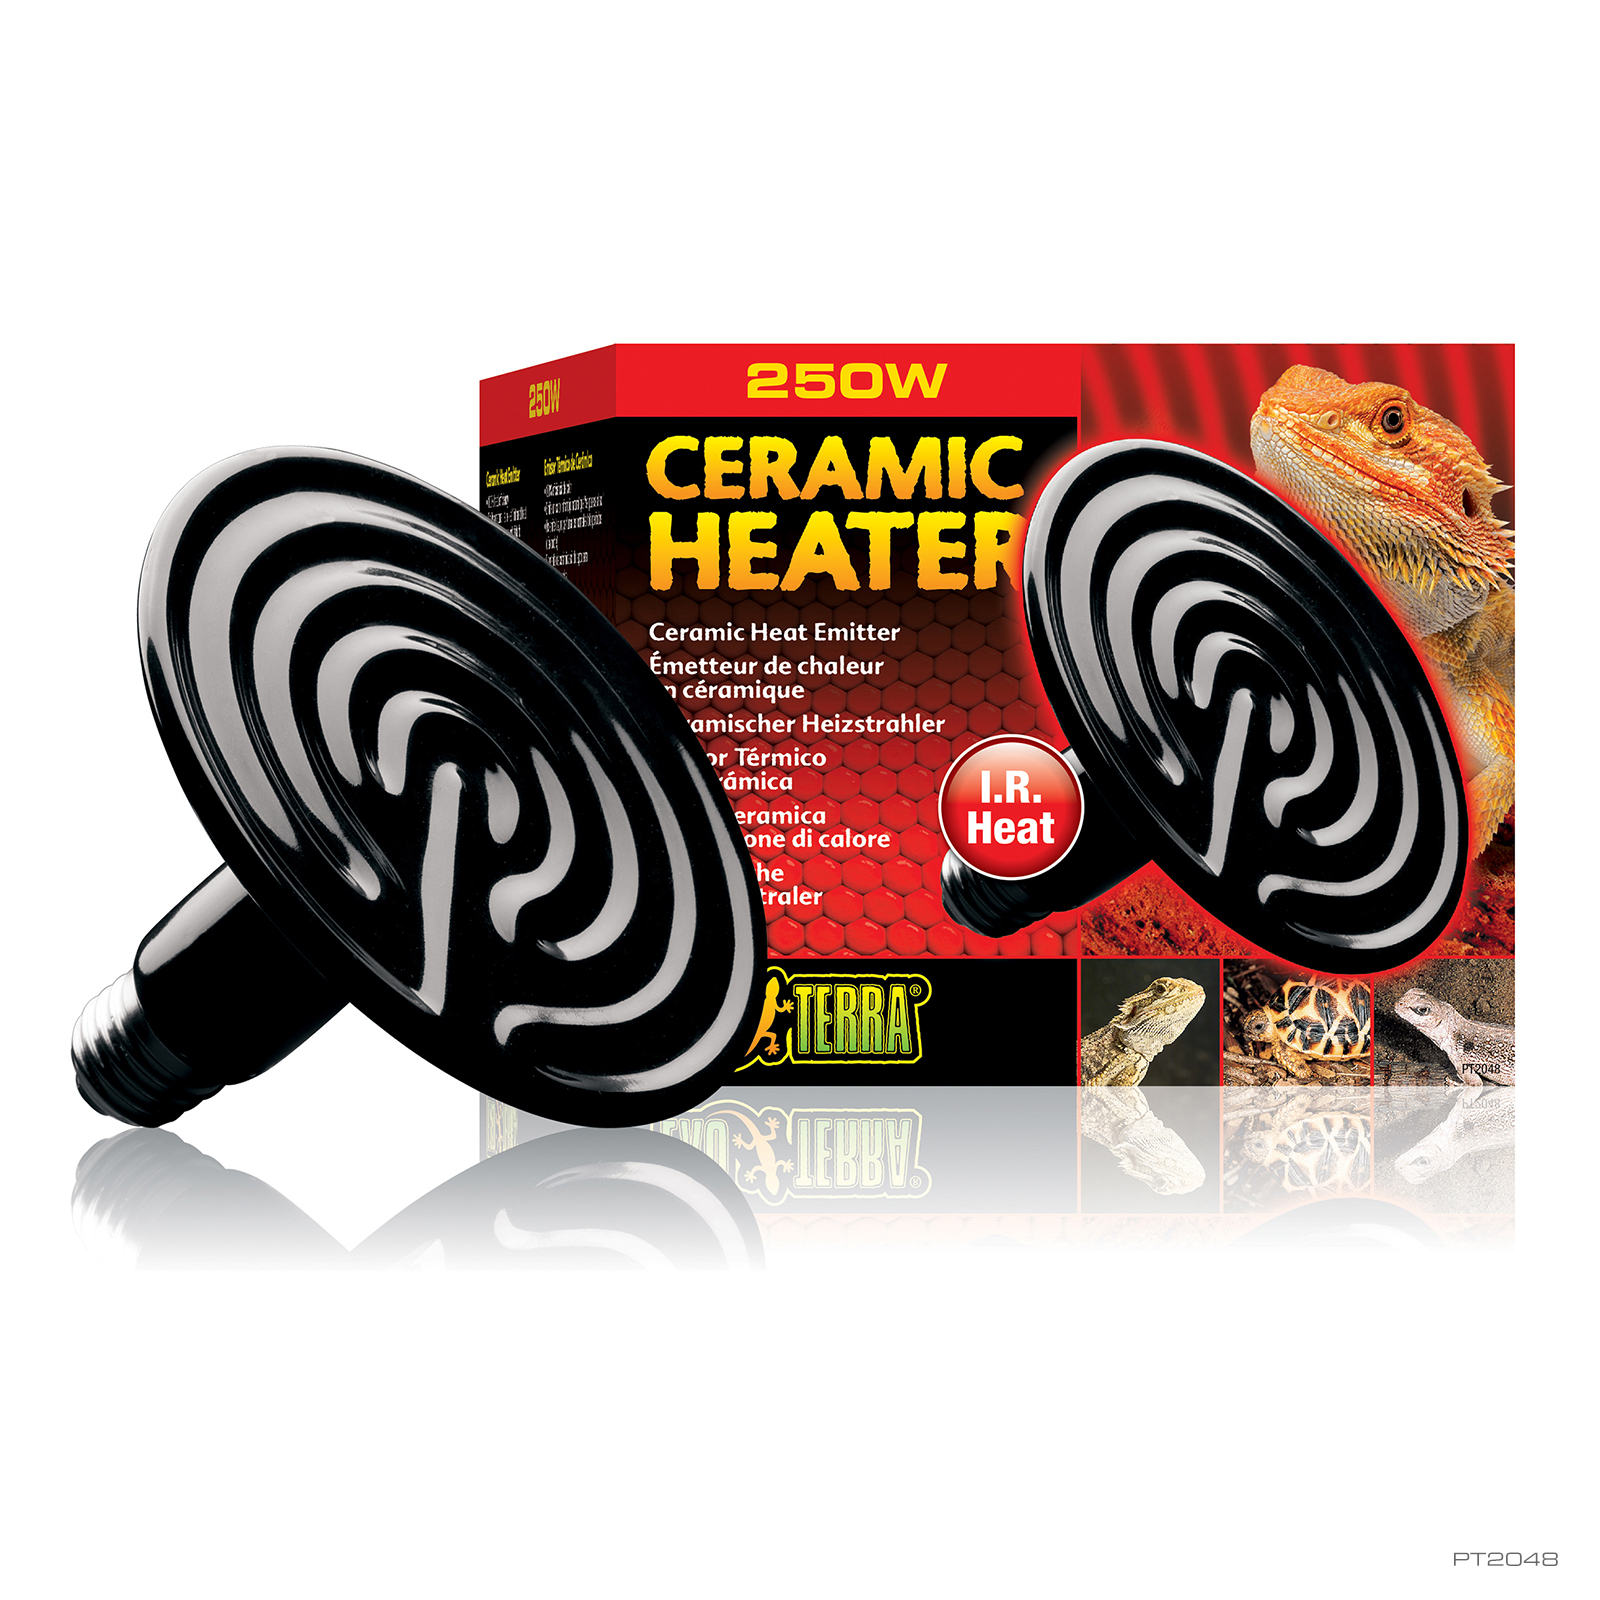 Ceramic Heater 250W